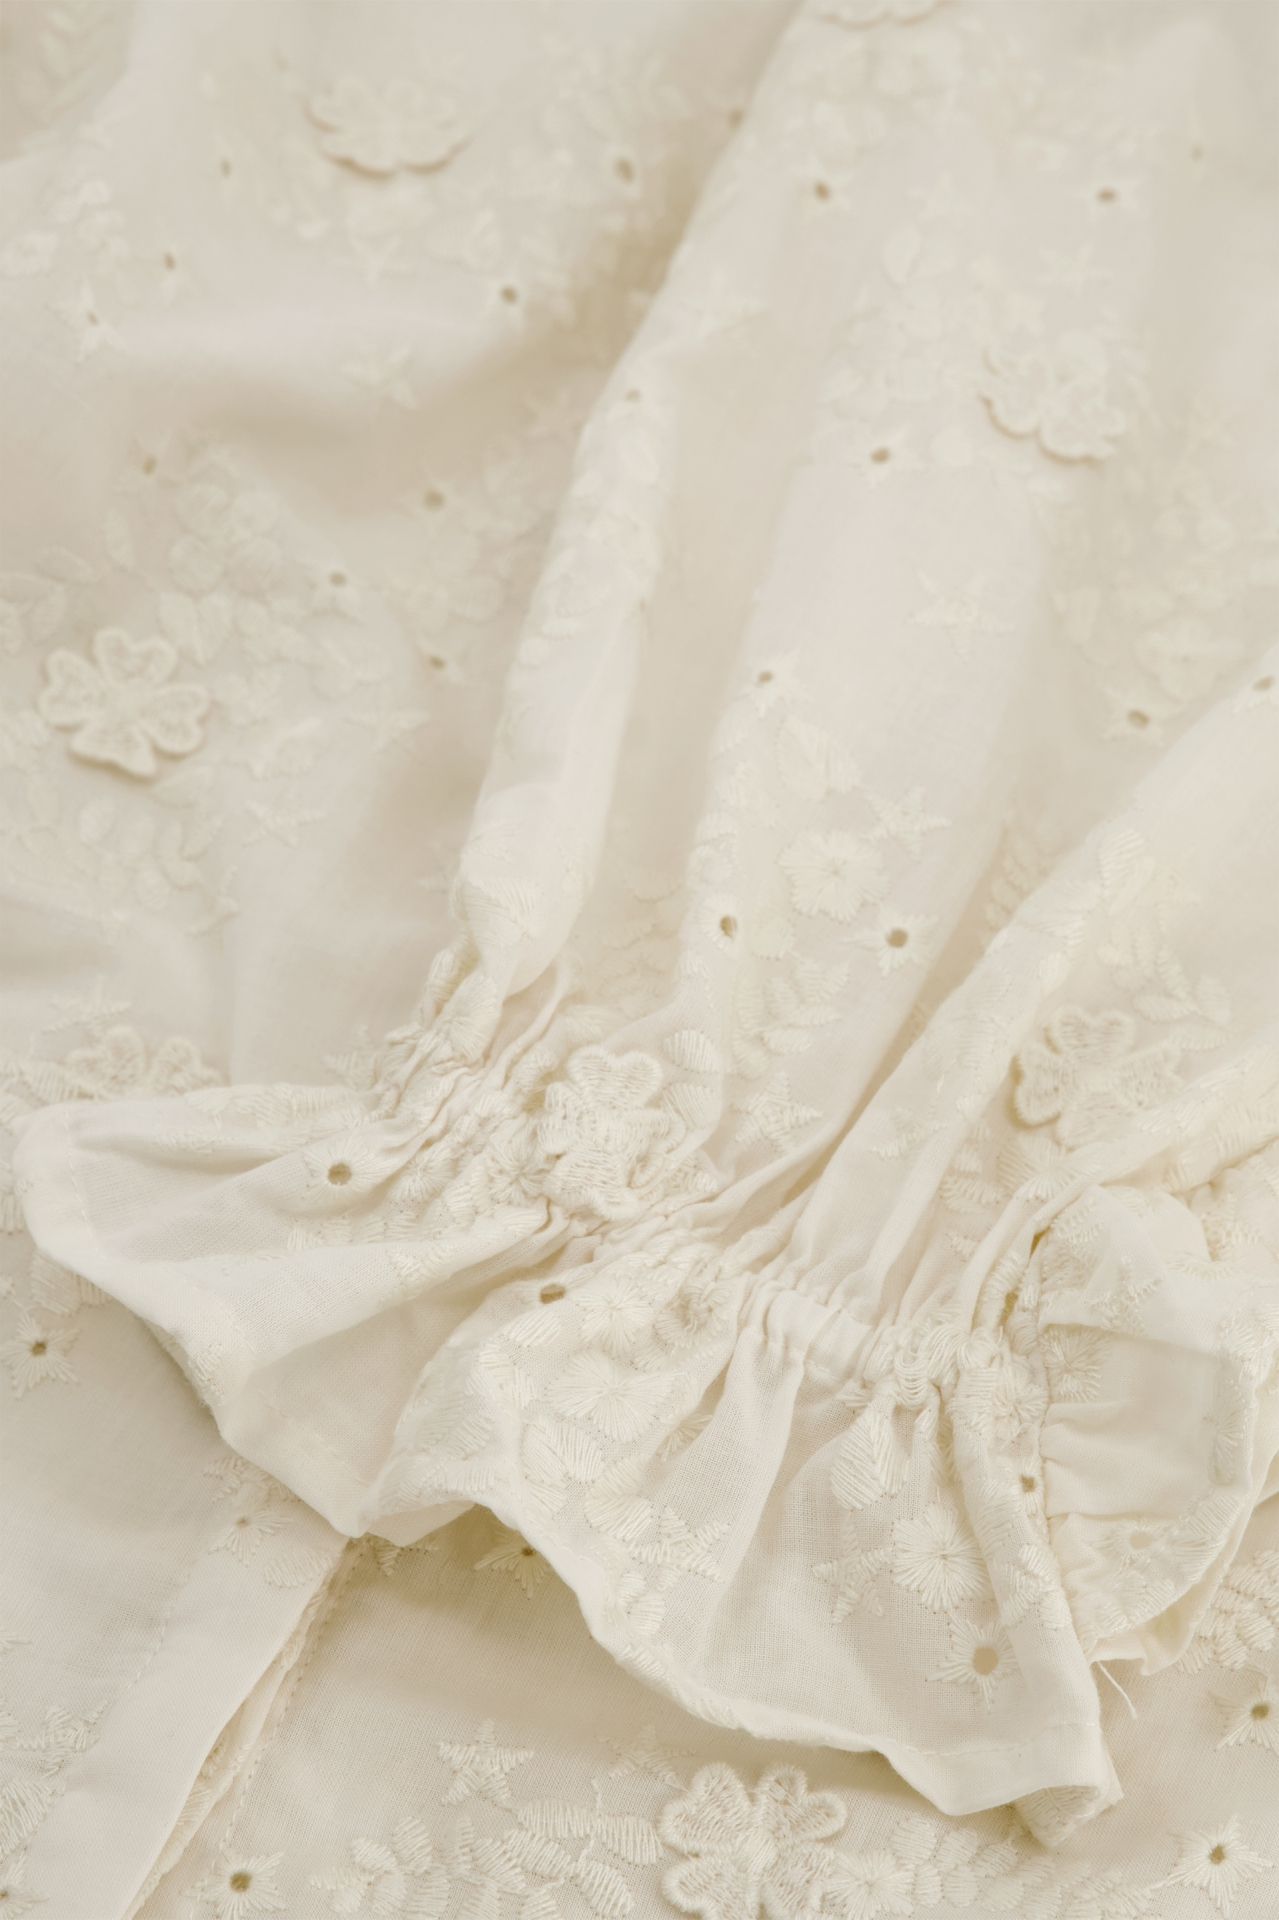 Fien blouse - warm white